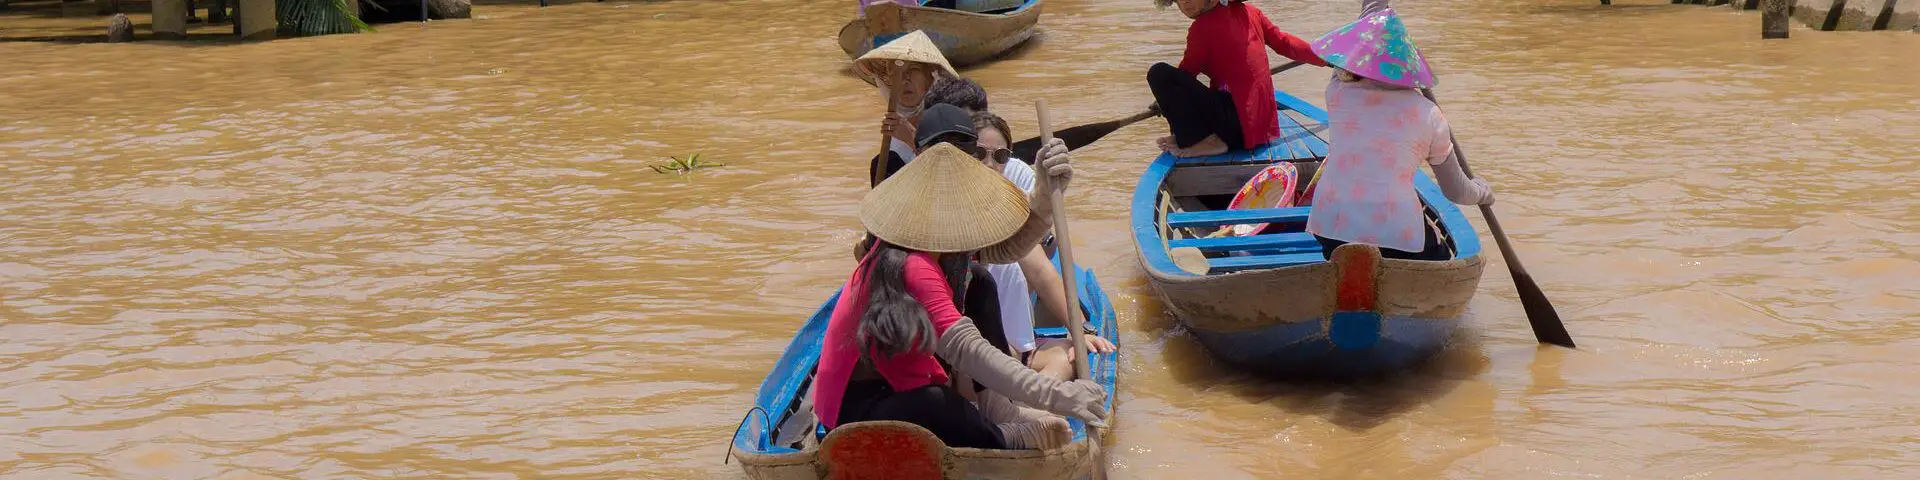 boat people on mekong river